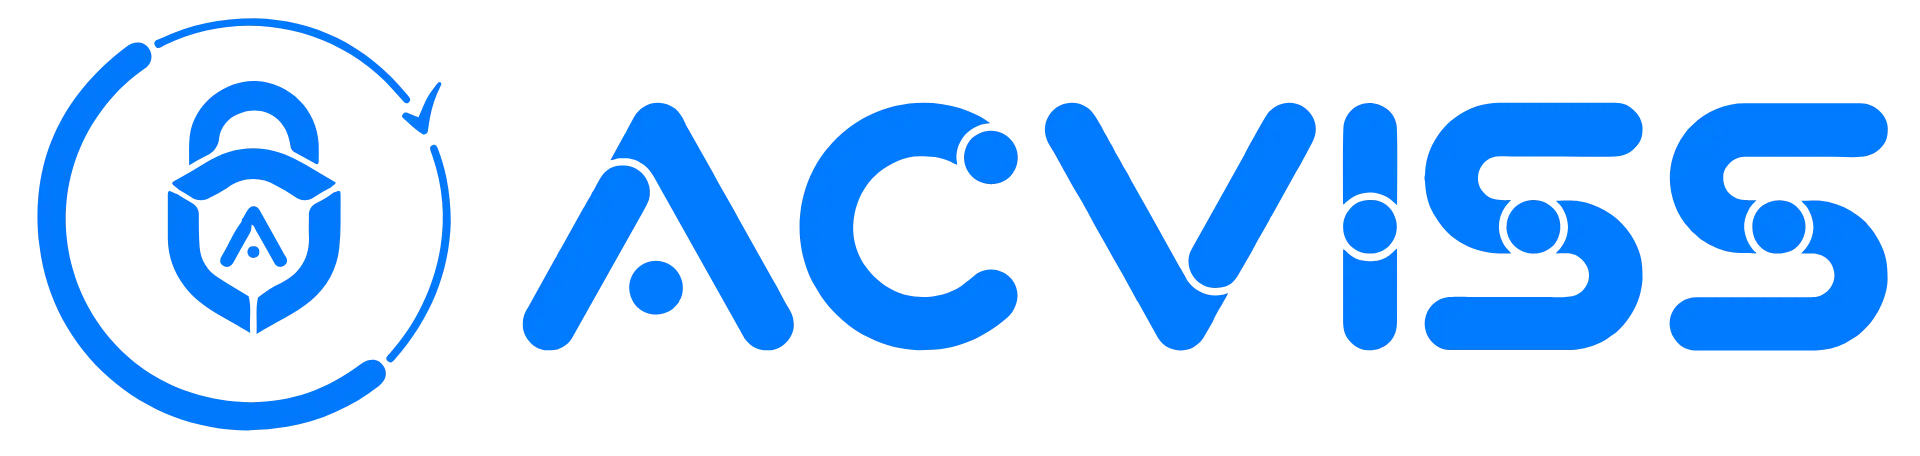 Acviss-logo